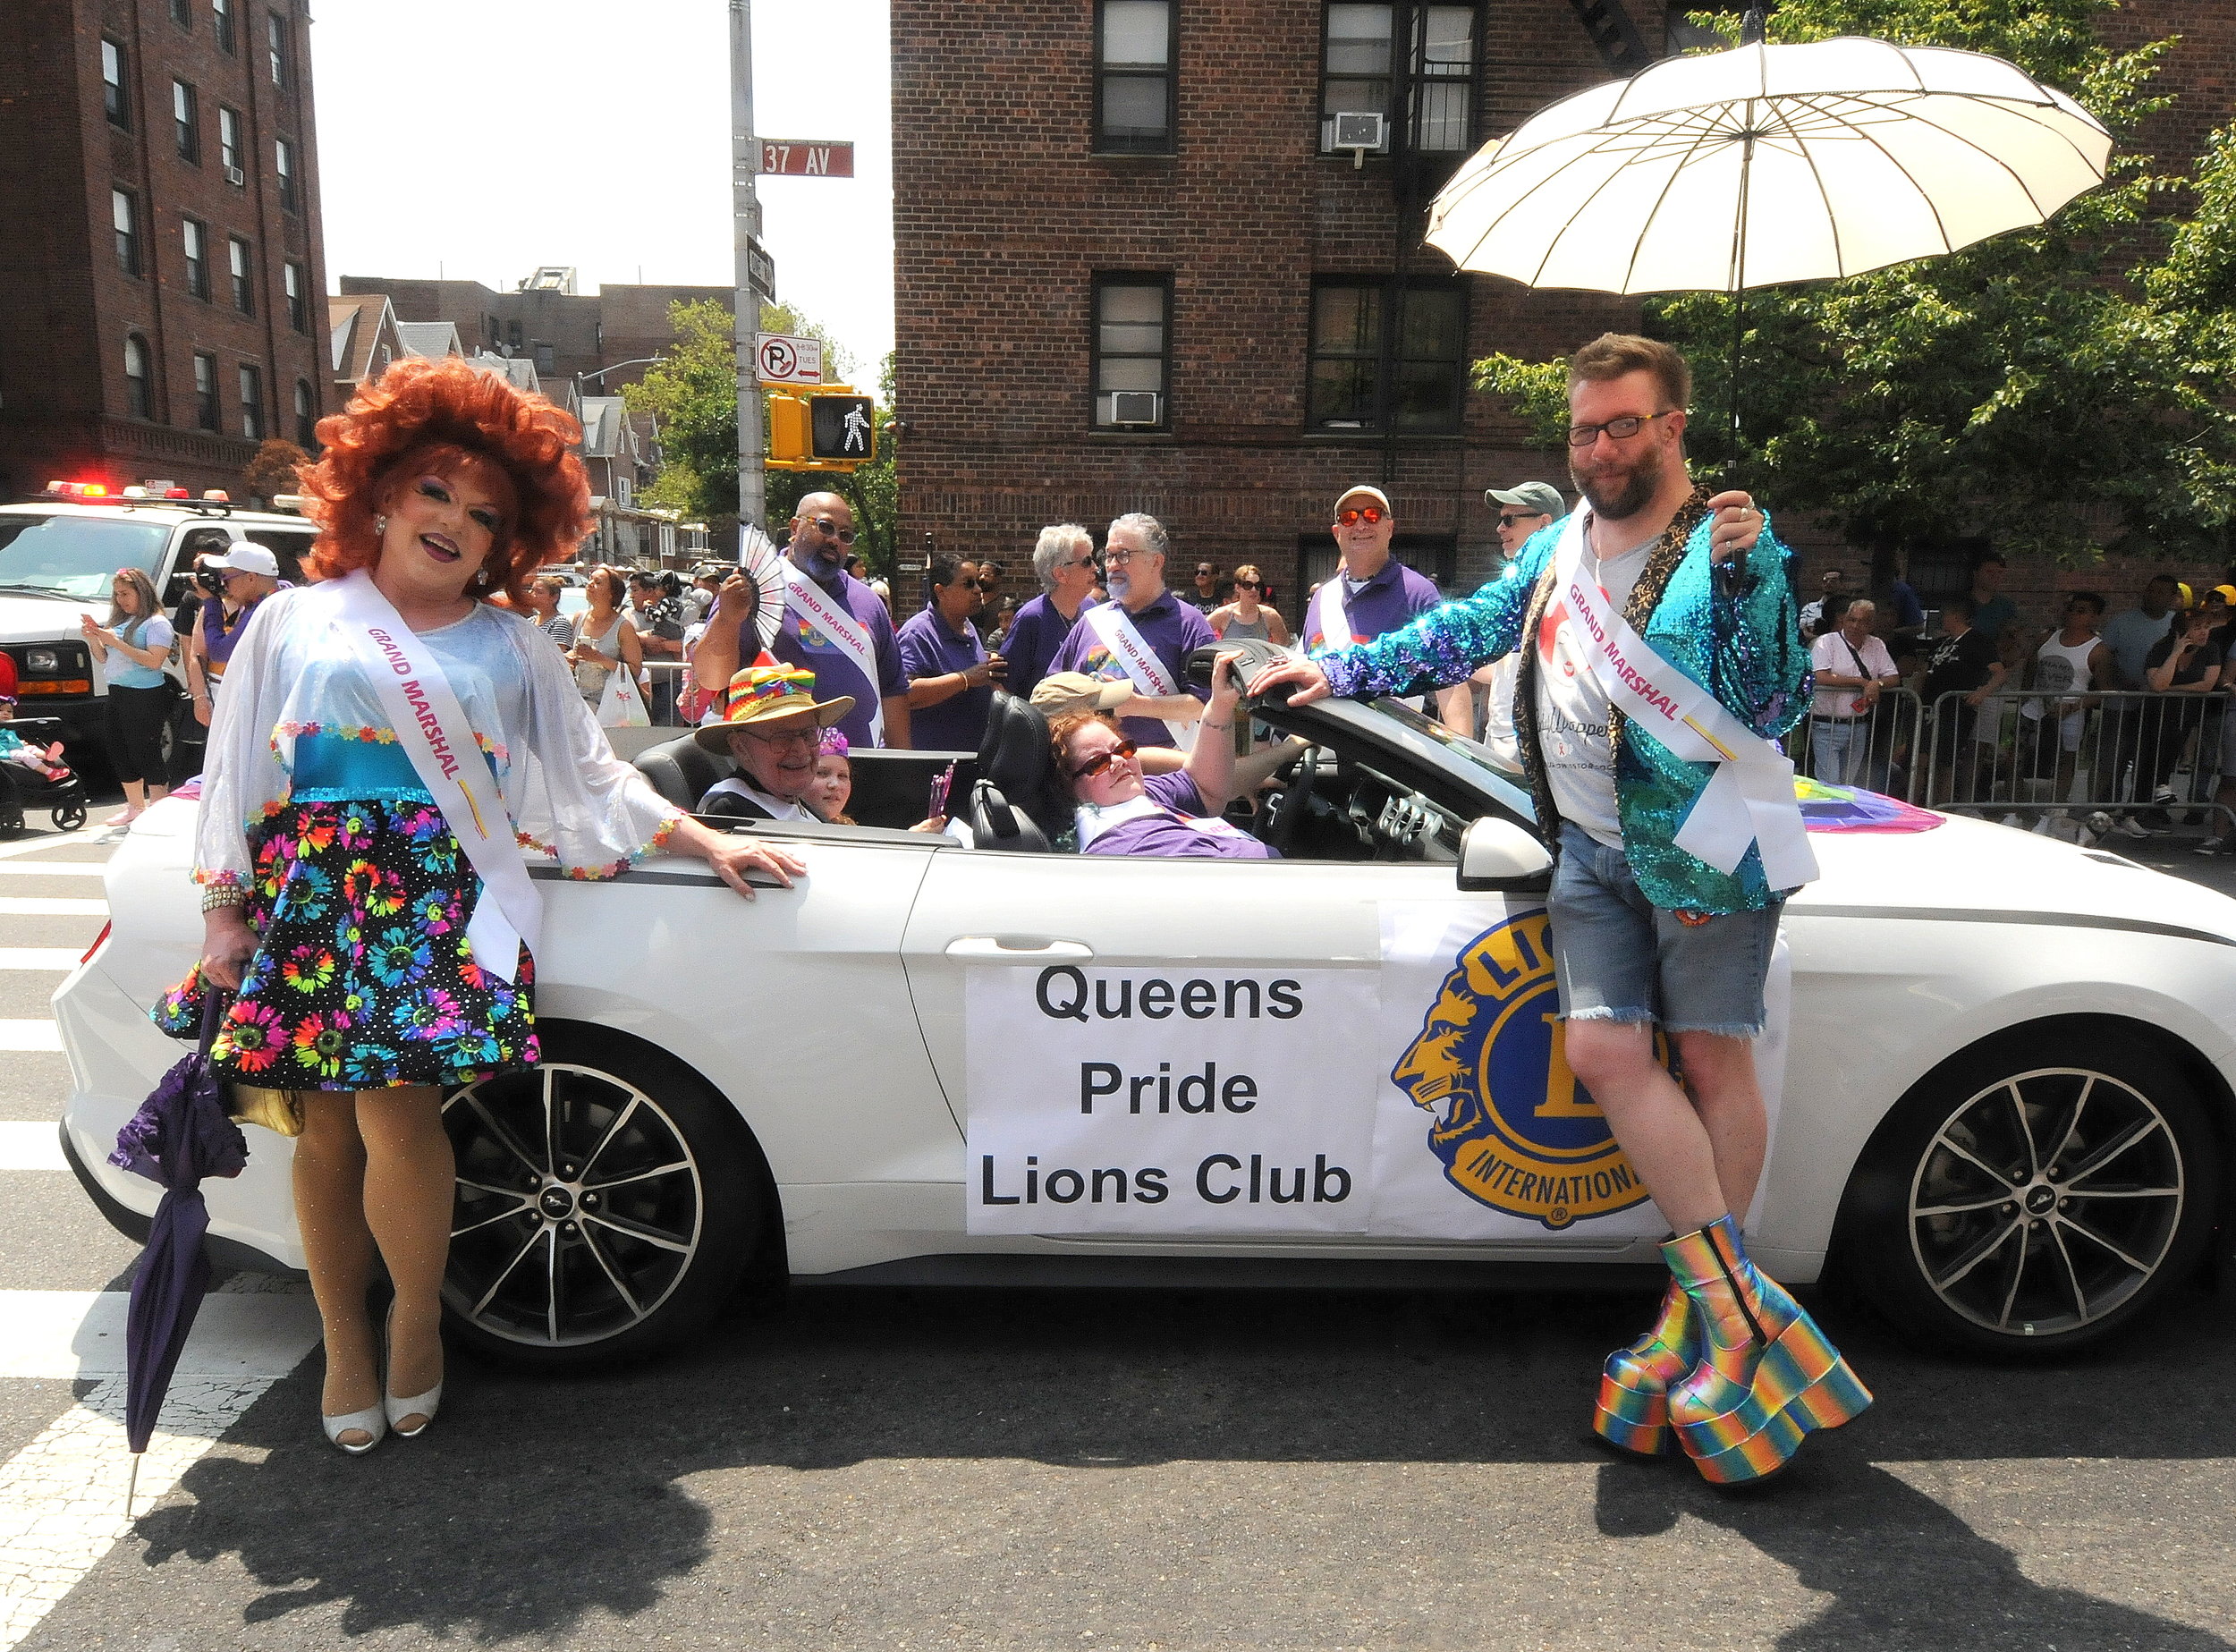  The Queens Pride Lions Club.   